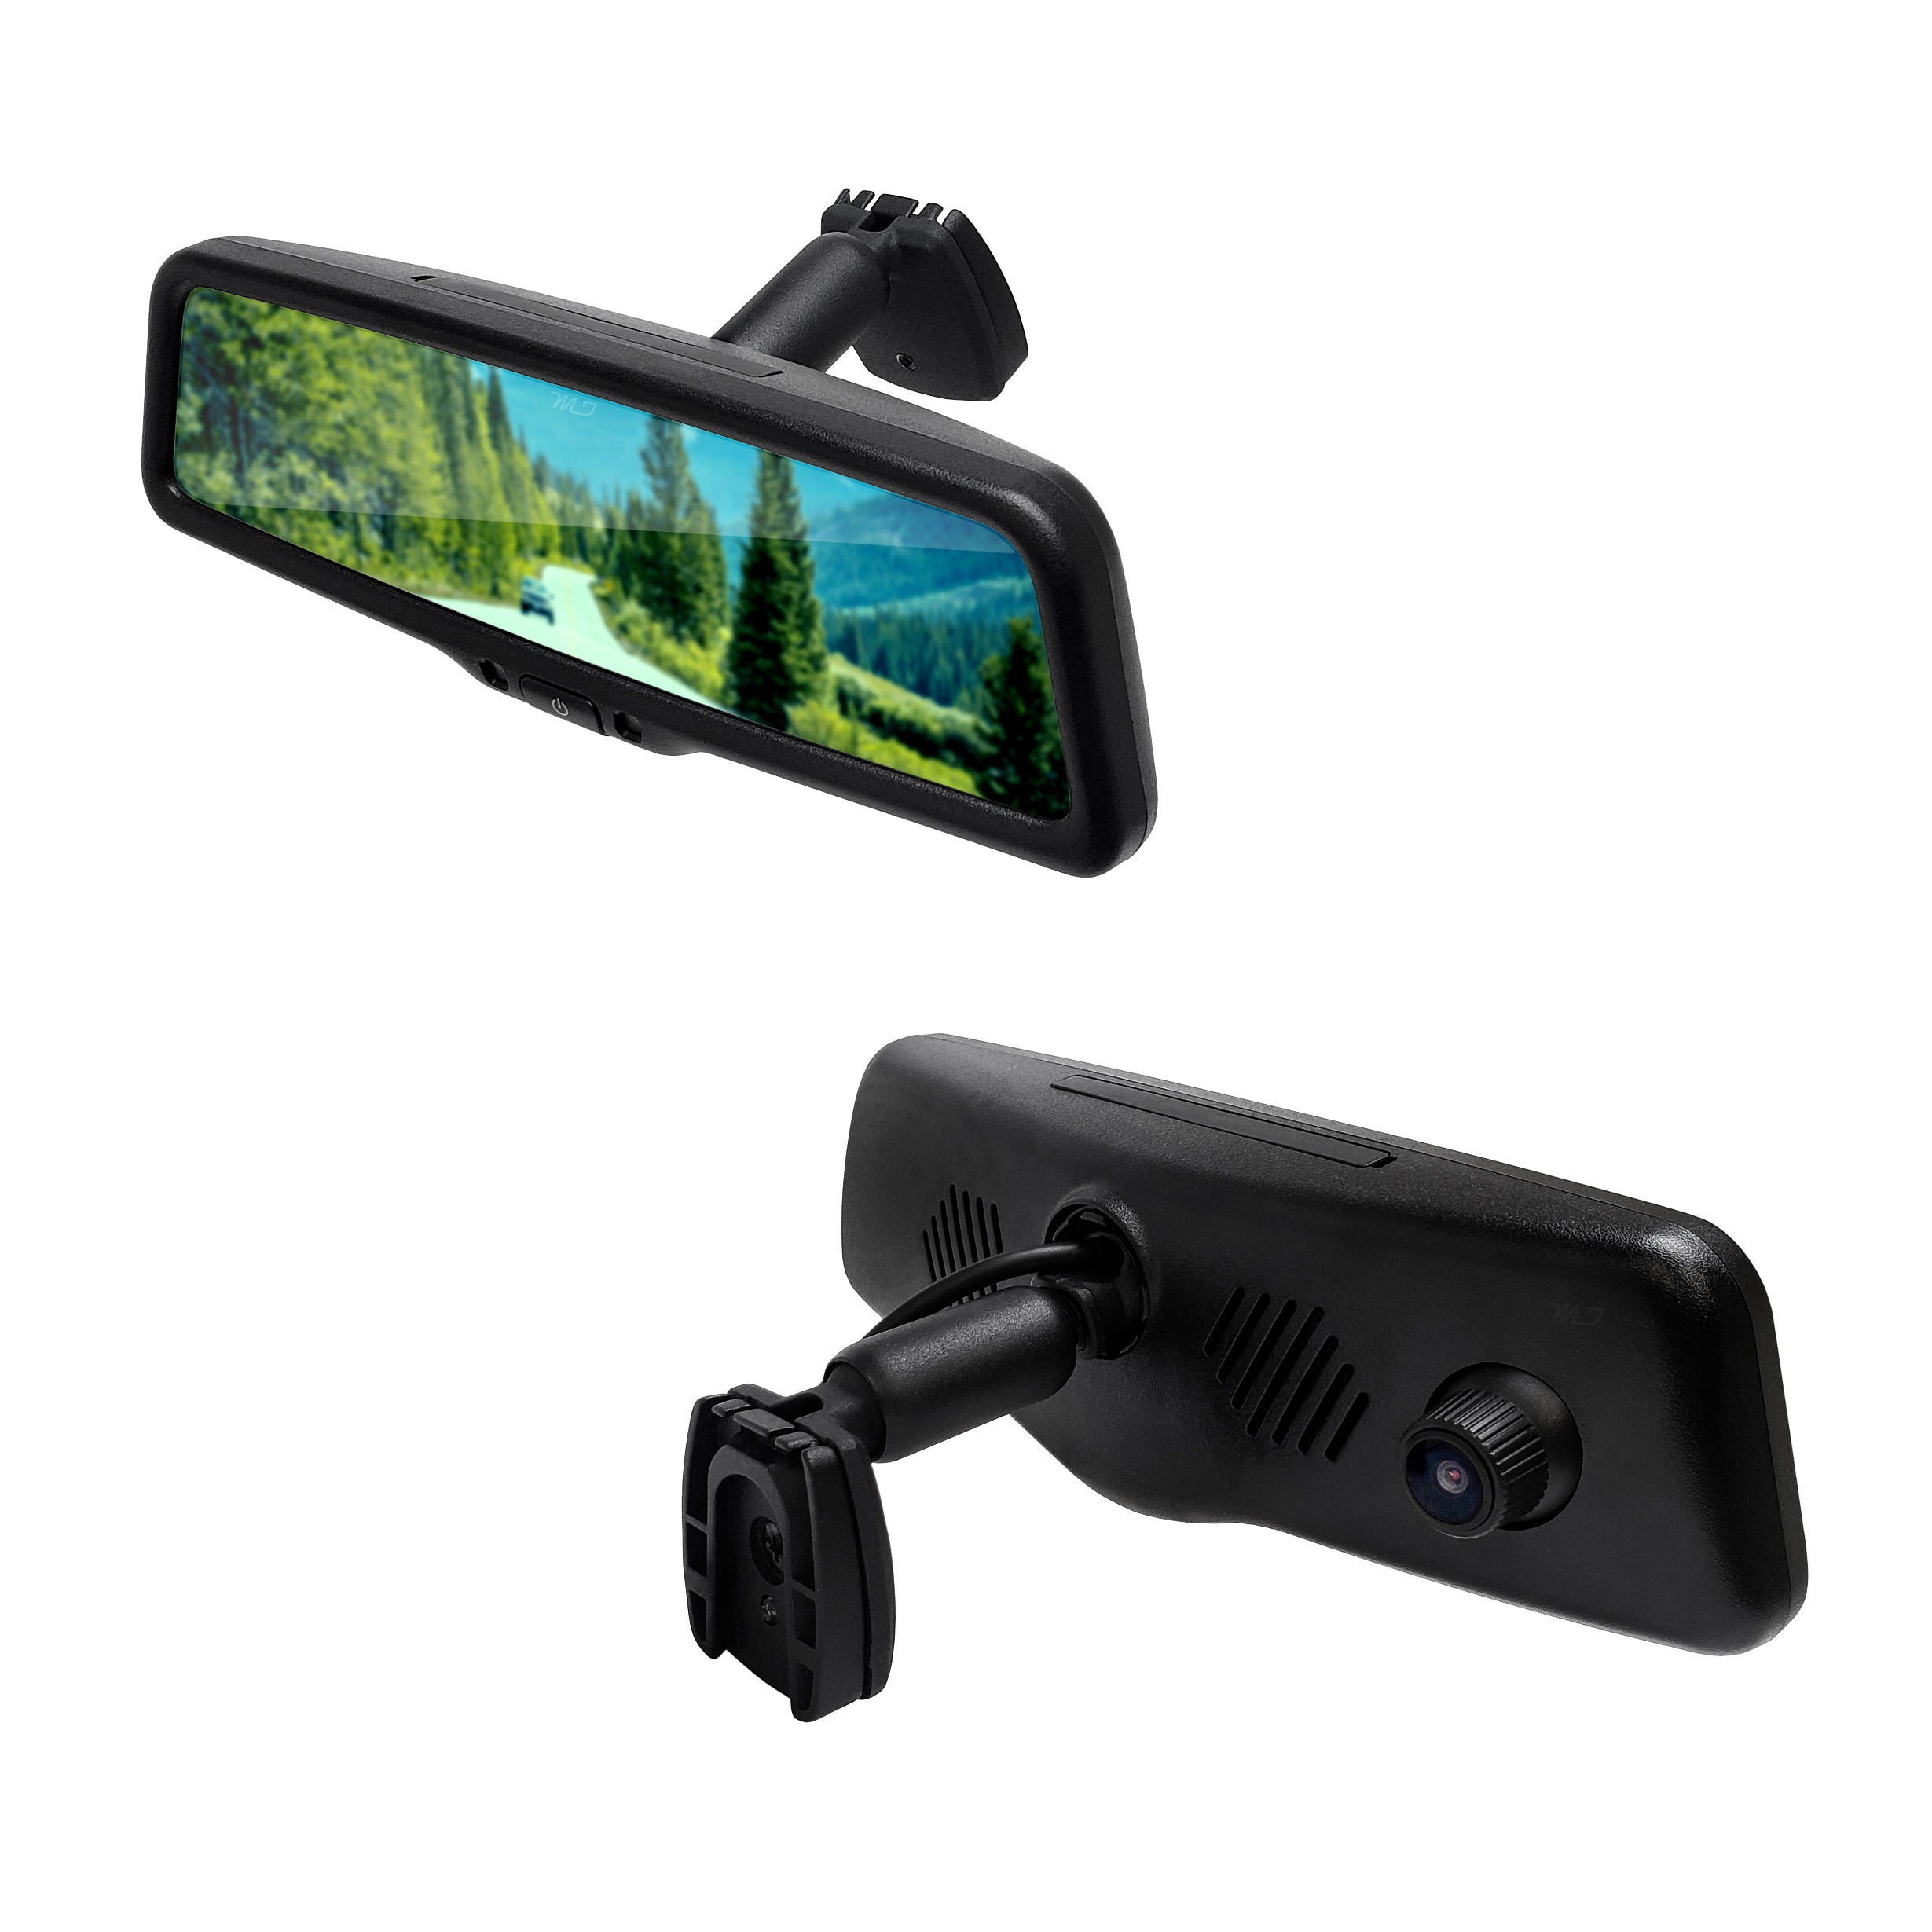 Rear View Mirror Auto Adjusting Brightness/Dimming LCD, Universal